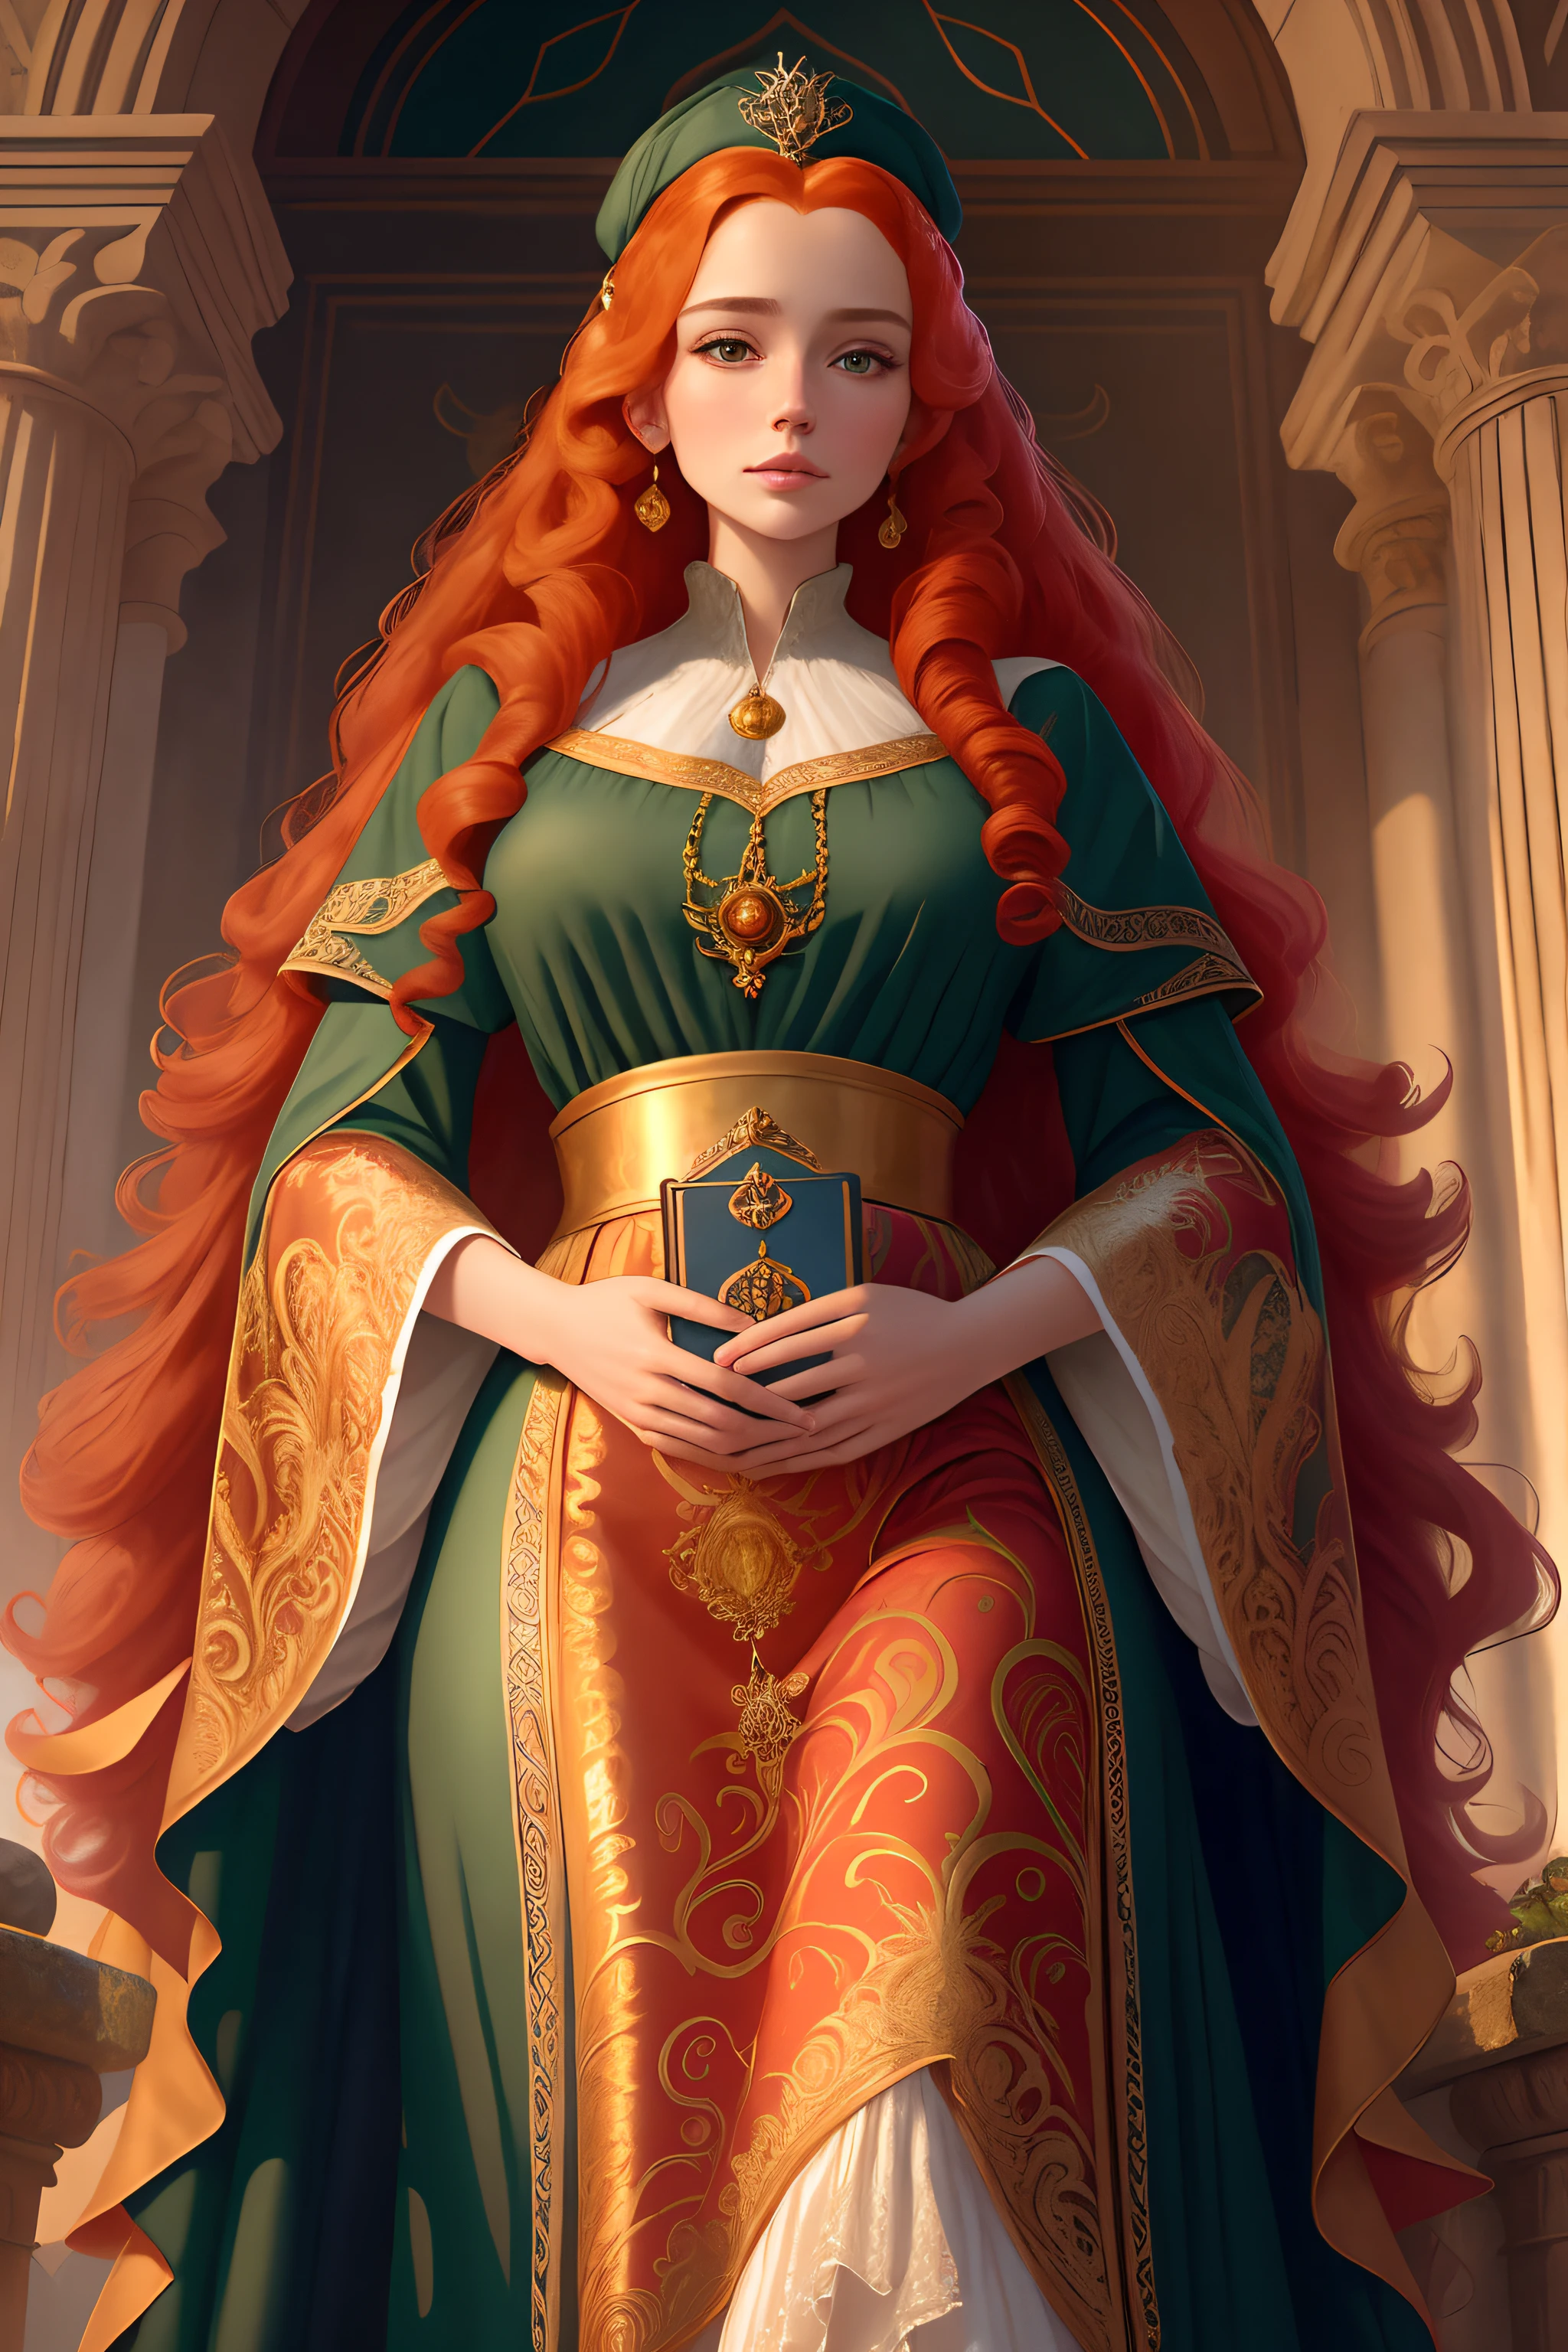 (FollyNobodySD15:0.8) 中世纪肖像幻想 (皇室:1.1) 长的 [姜|金发女郎] wavy hair princess glorious elaborate ornate royal emerald robes tiara gems standing in a 详细的 luxurious stone castle Game of Thrones Hogwarts bright morning light from window, (杰作:1.2) (最好的质量) (详细的) (错综复杂) (8千) (HDR) (墙纸) (电影灯光) (清晰聚焦)